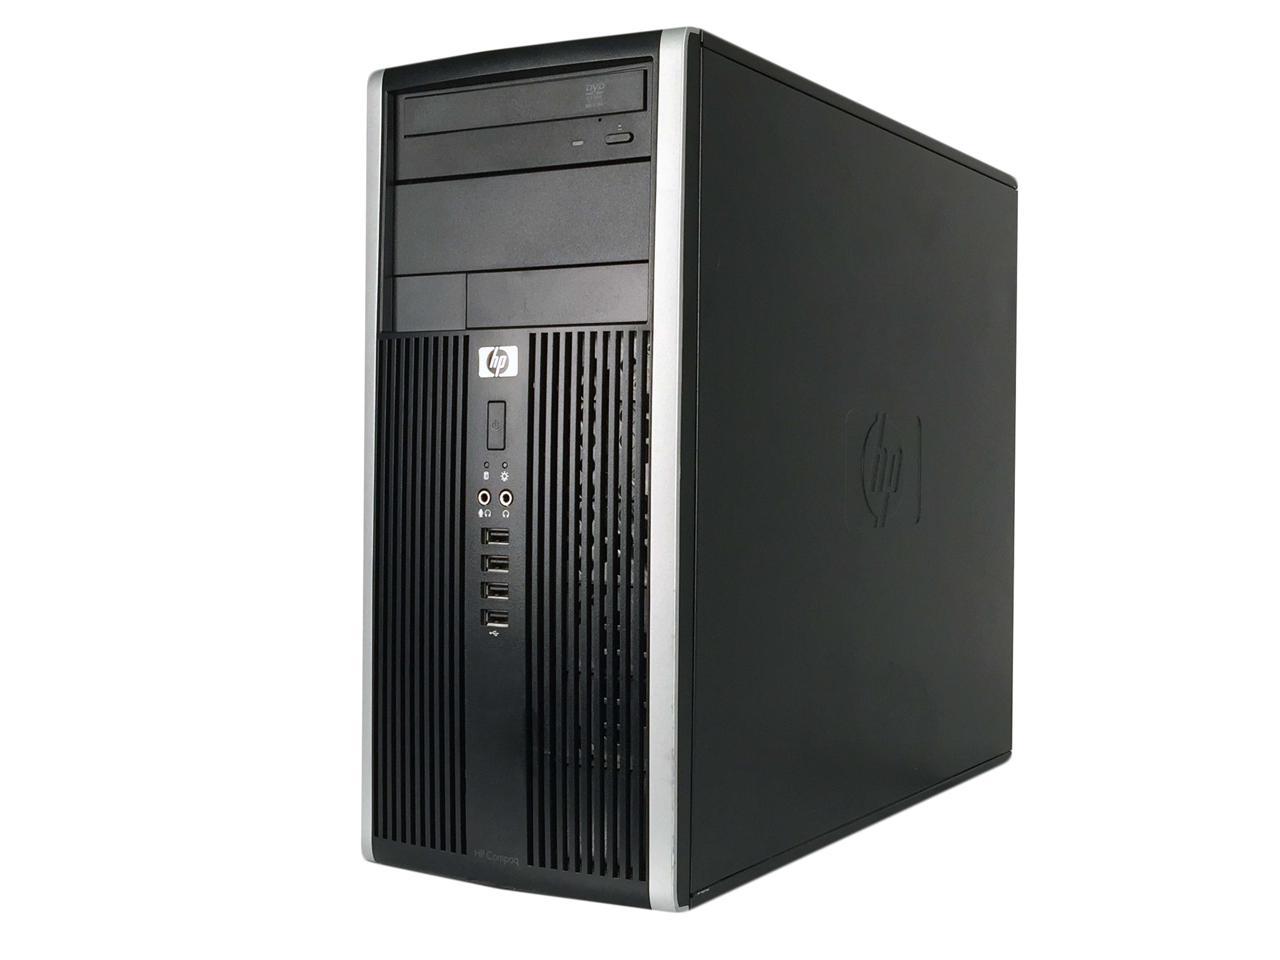 HP Compaq 6200 Pro Tower Intel Core i5 2400 3.10 GHz, 12 GB DDR3, 1 TB HDD, DVD, WiFi, BT 4.0, DP Adapter, Windows 10 Pro 64-Bit, 1 Year Warranty